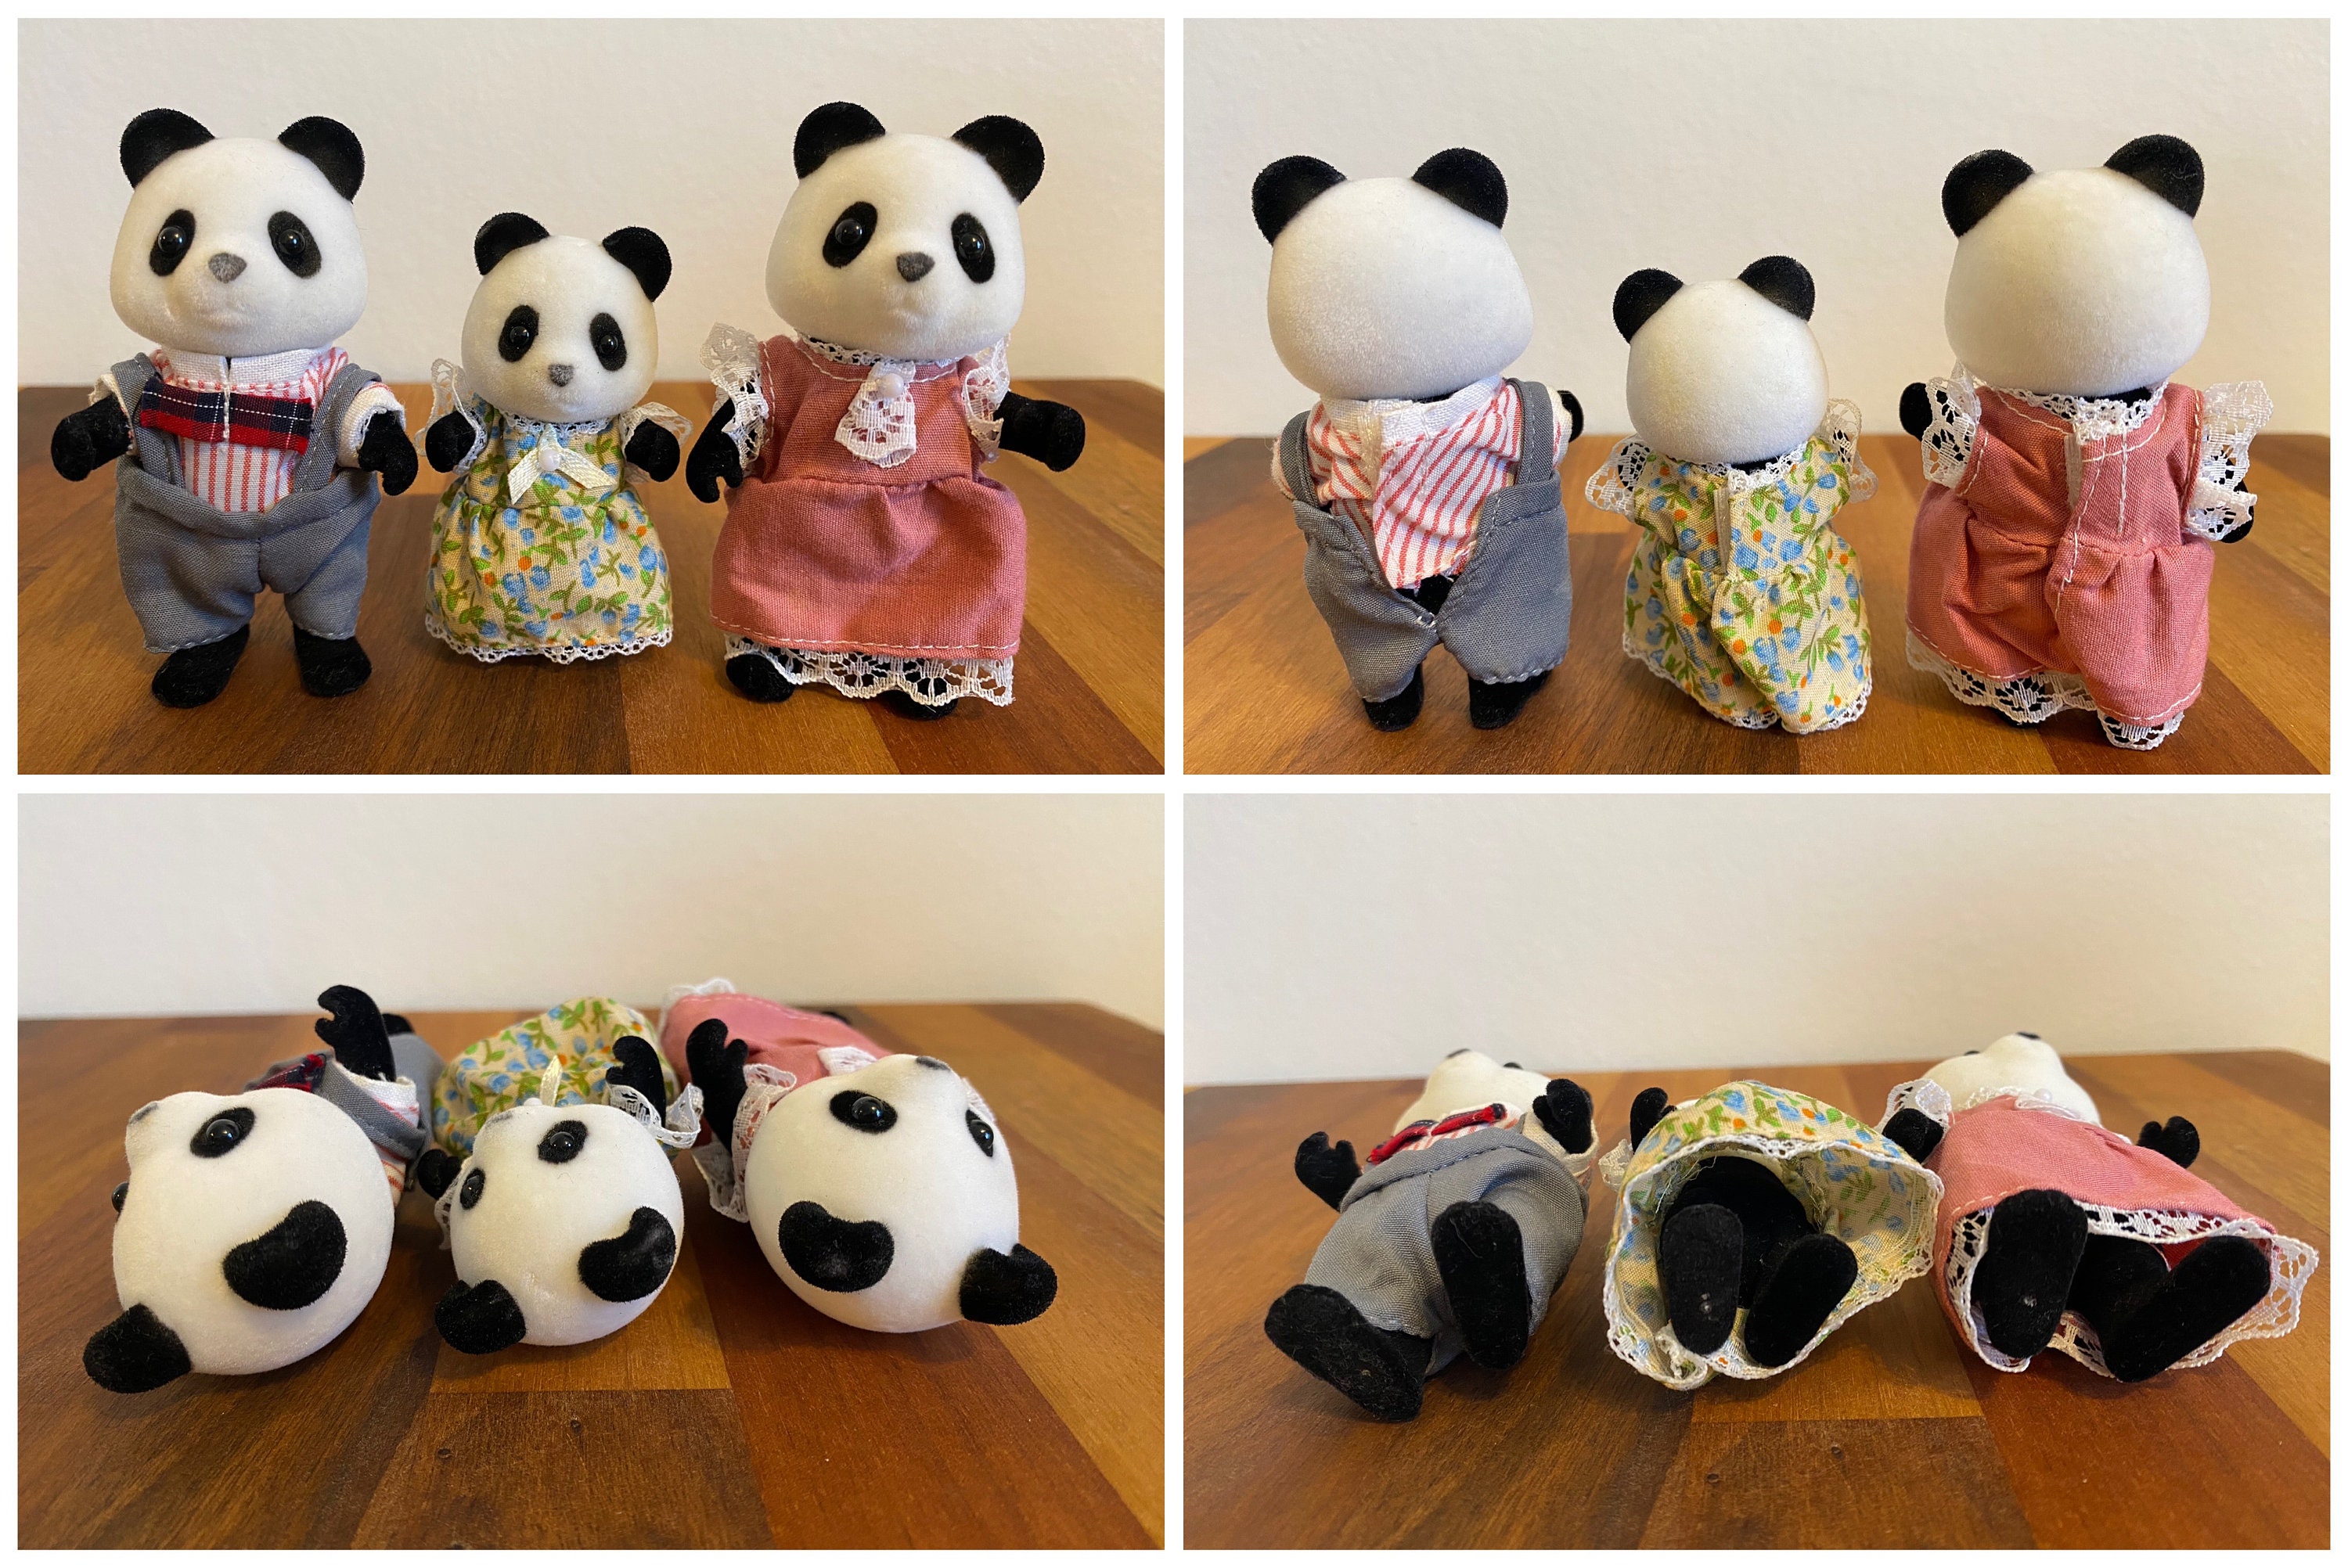 The Bamboo Panda Family - Sylvanian Families